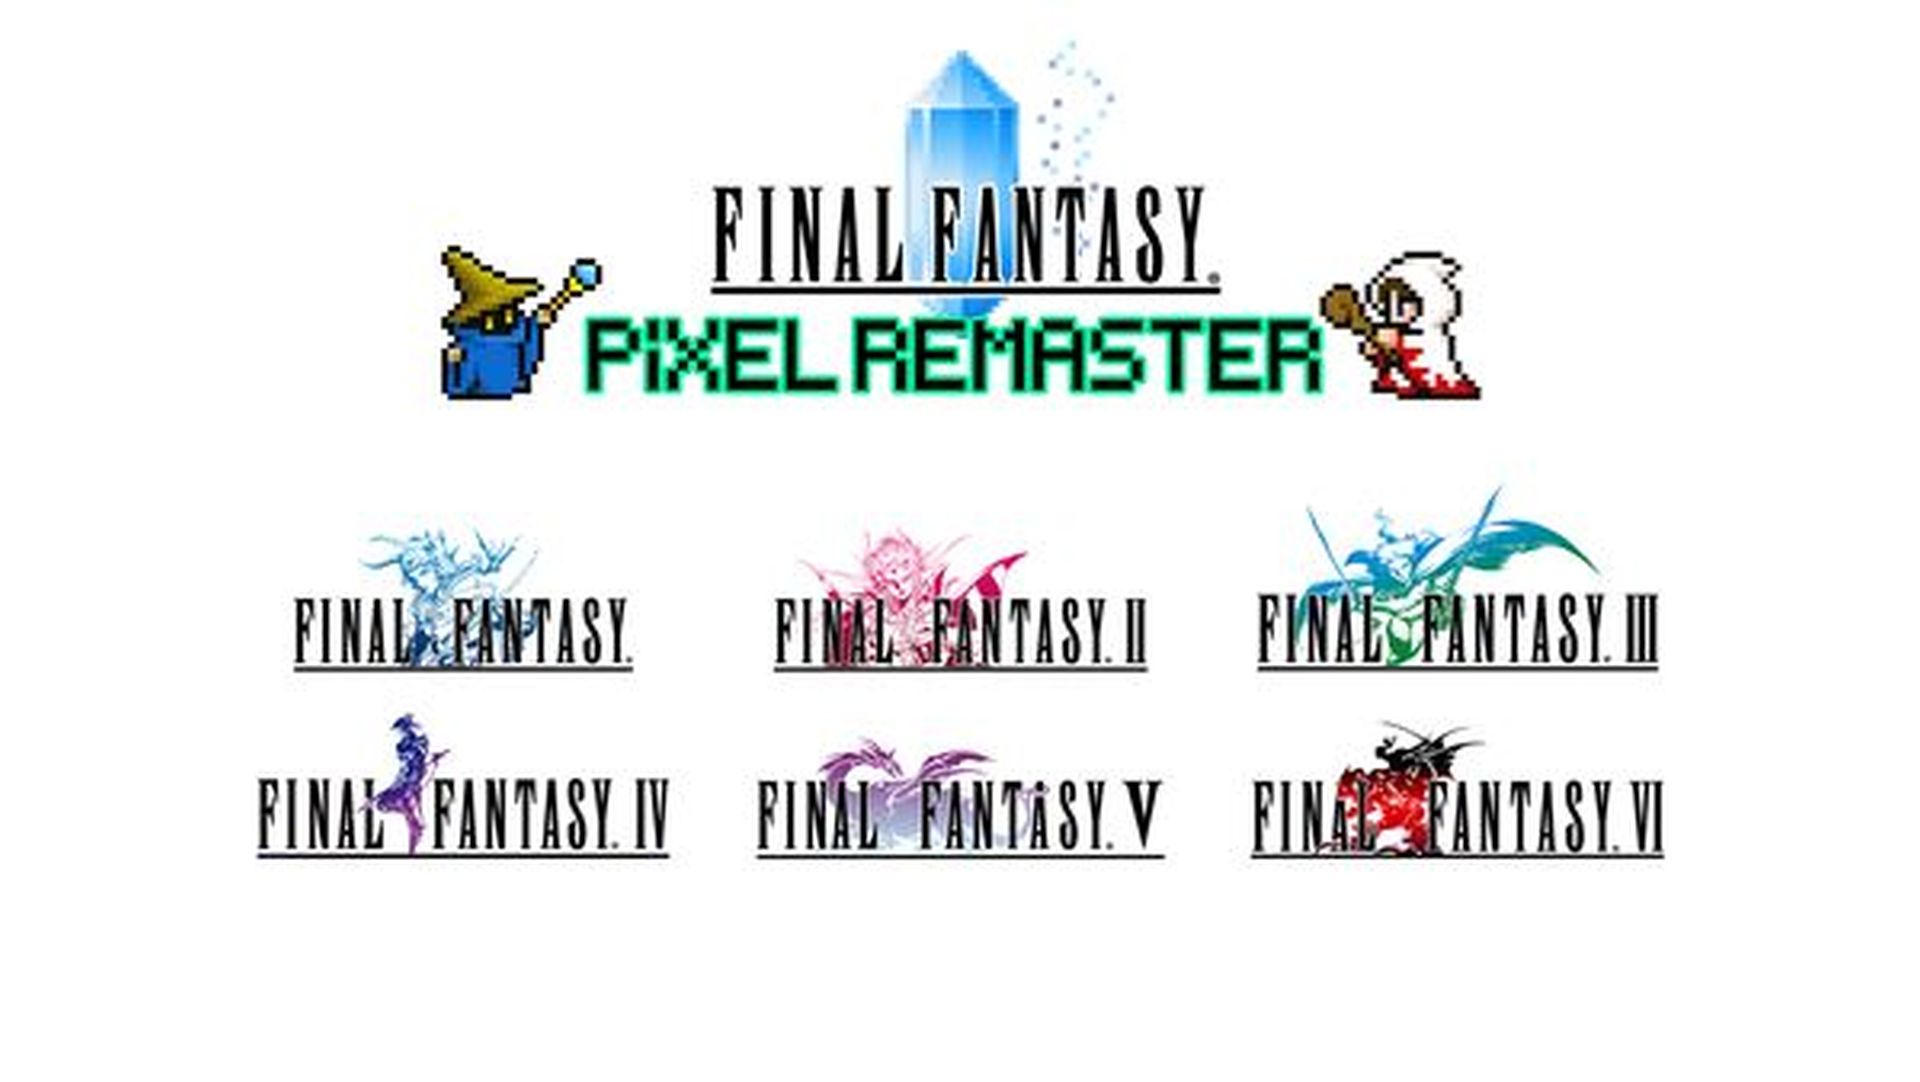 Final Fantasy Pixel Remaster Has Sold 3 Million Copies